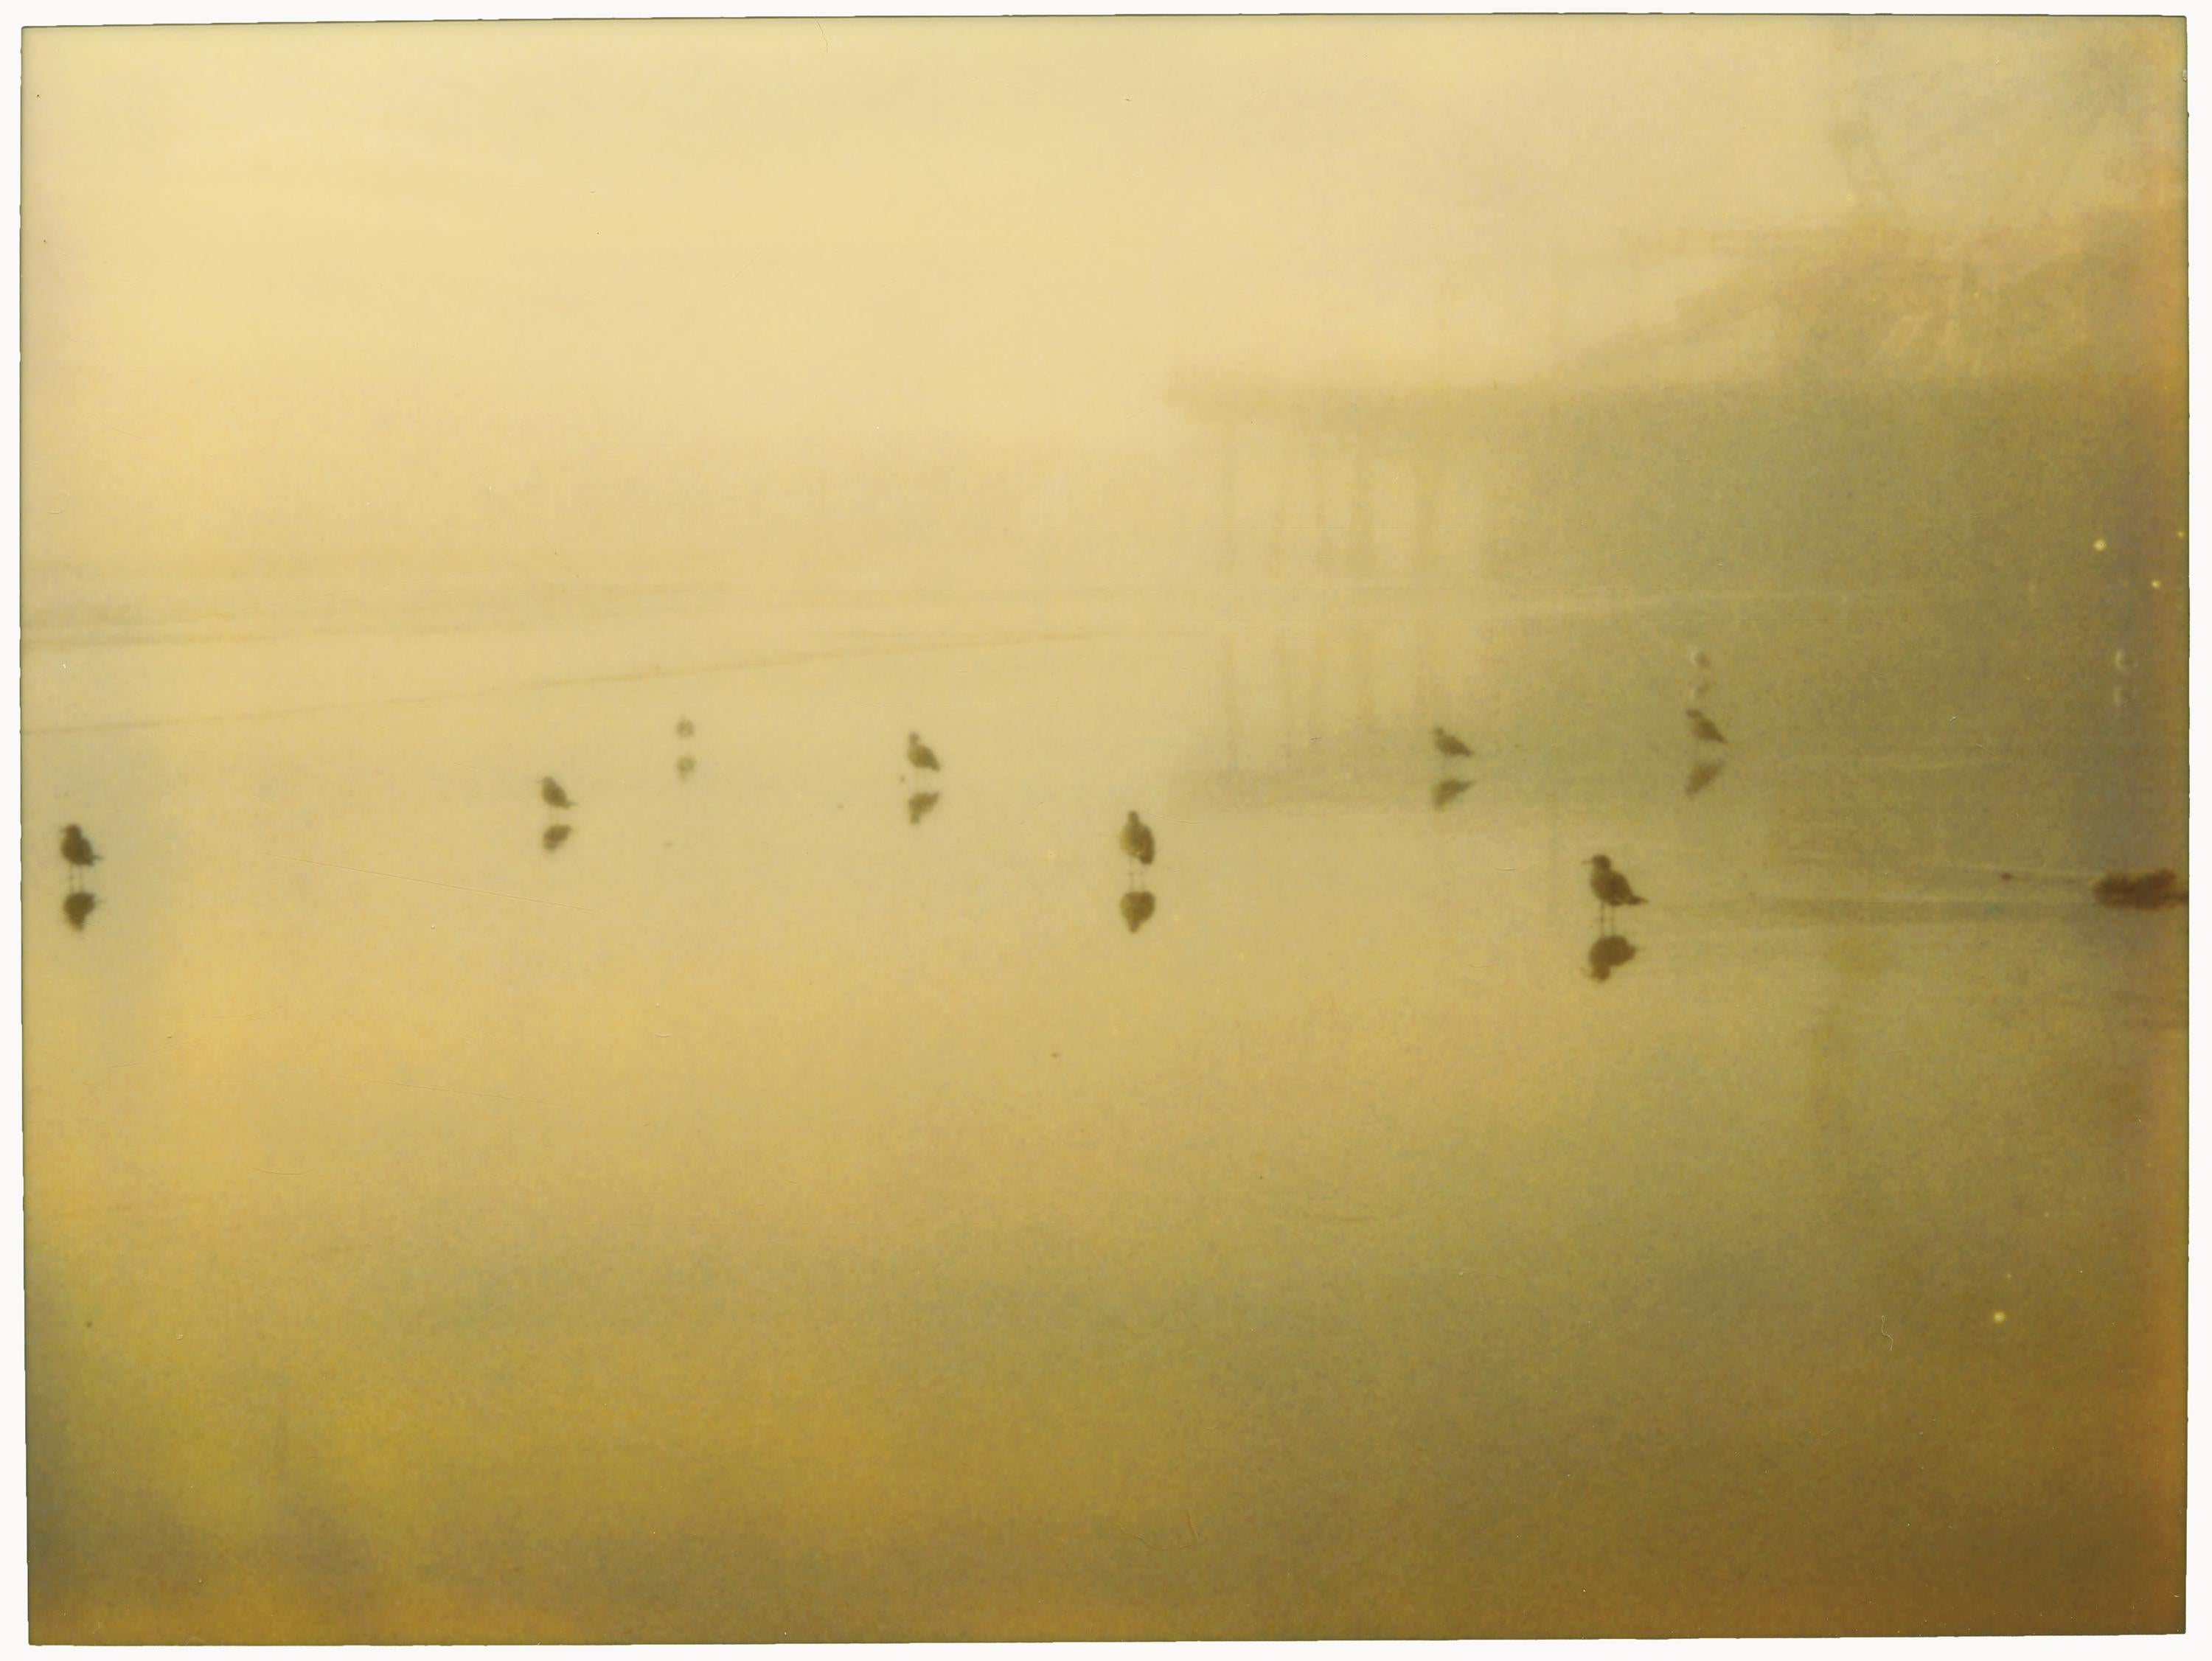 Stefanie Schneider Landscape Photograph - Santa Monica Pier (Stranger than Paradise) - Analog, hand-print, Polaroid